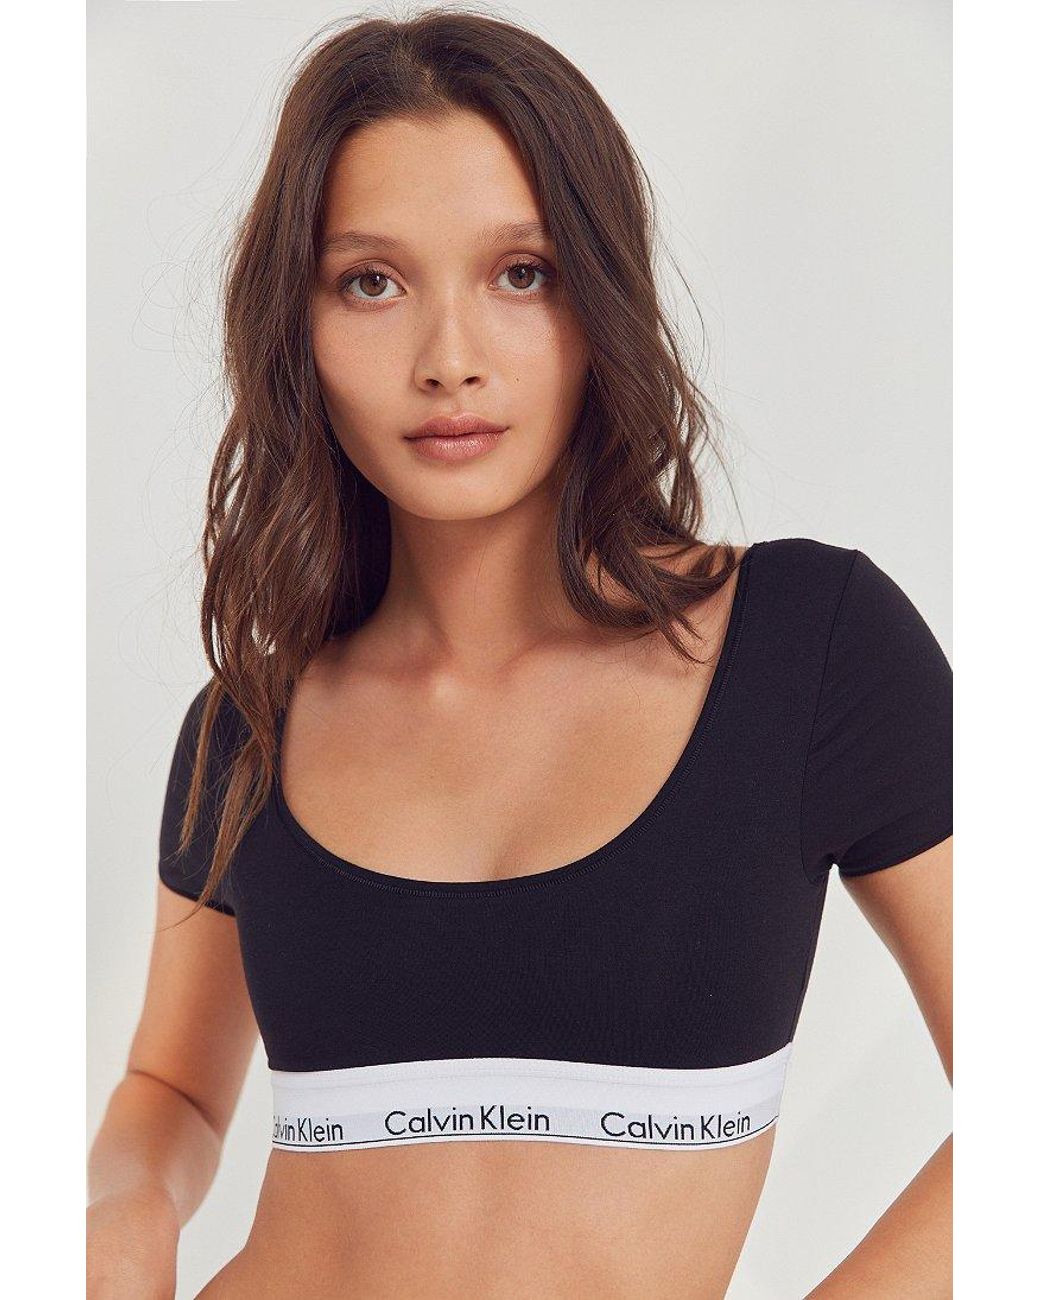 Calvin Klein Short Sleeve Bra Top in Black | Lyst